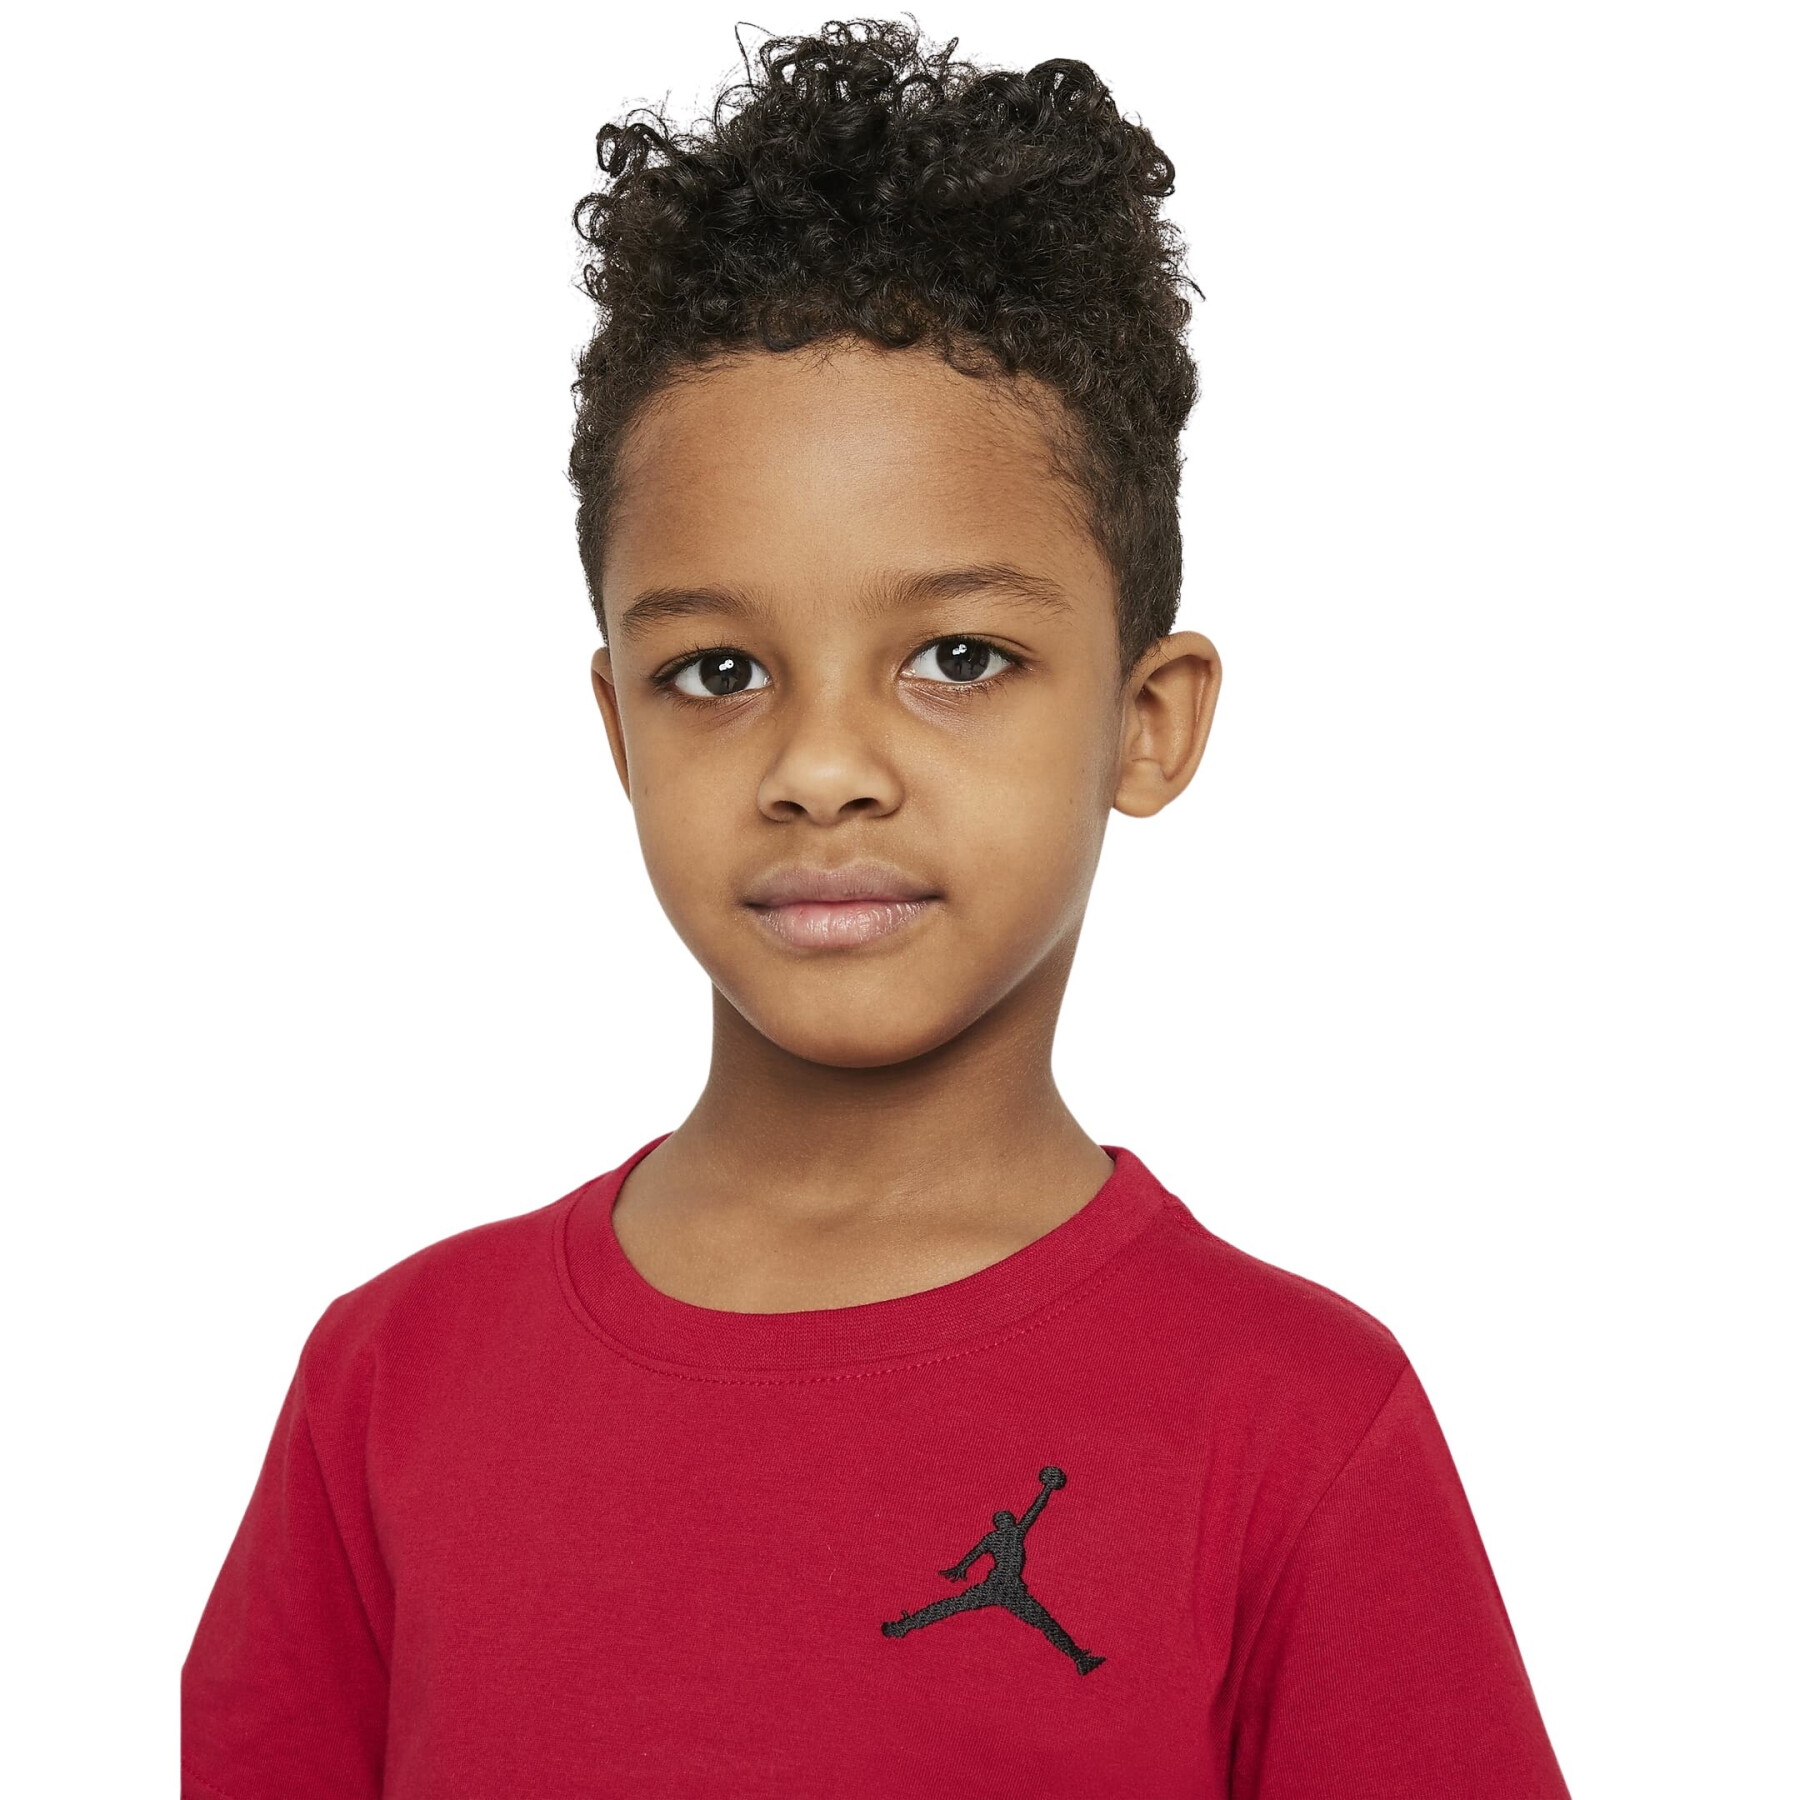 Kinder-T-shirt Jordan Jumpman Air EMB